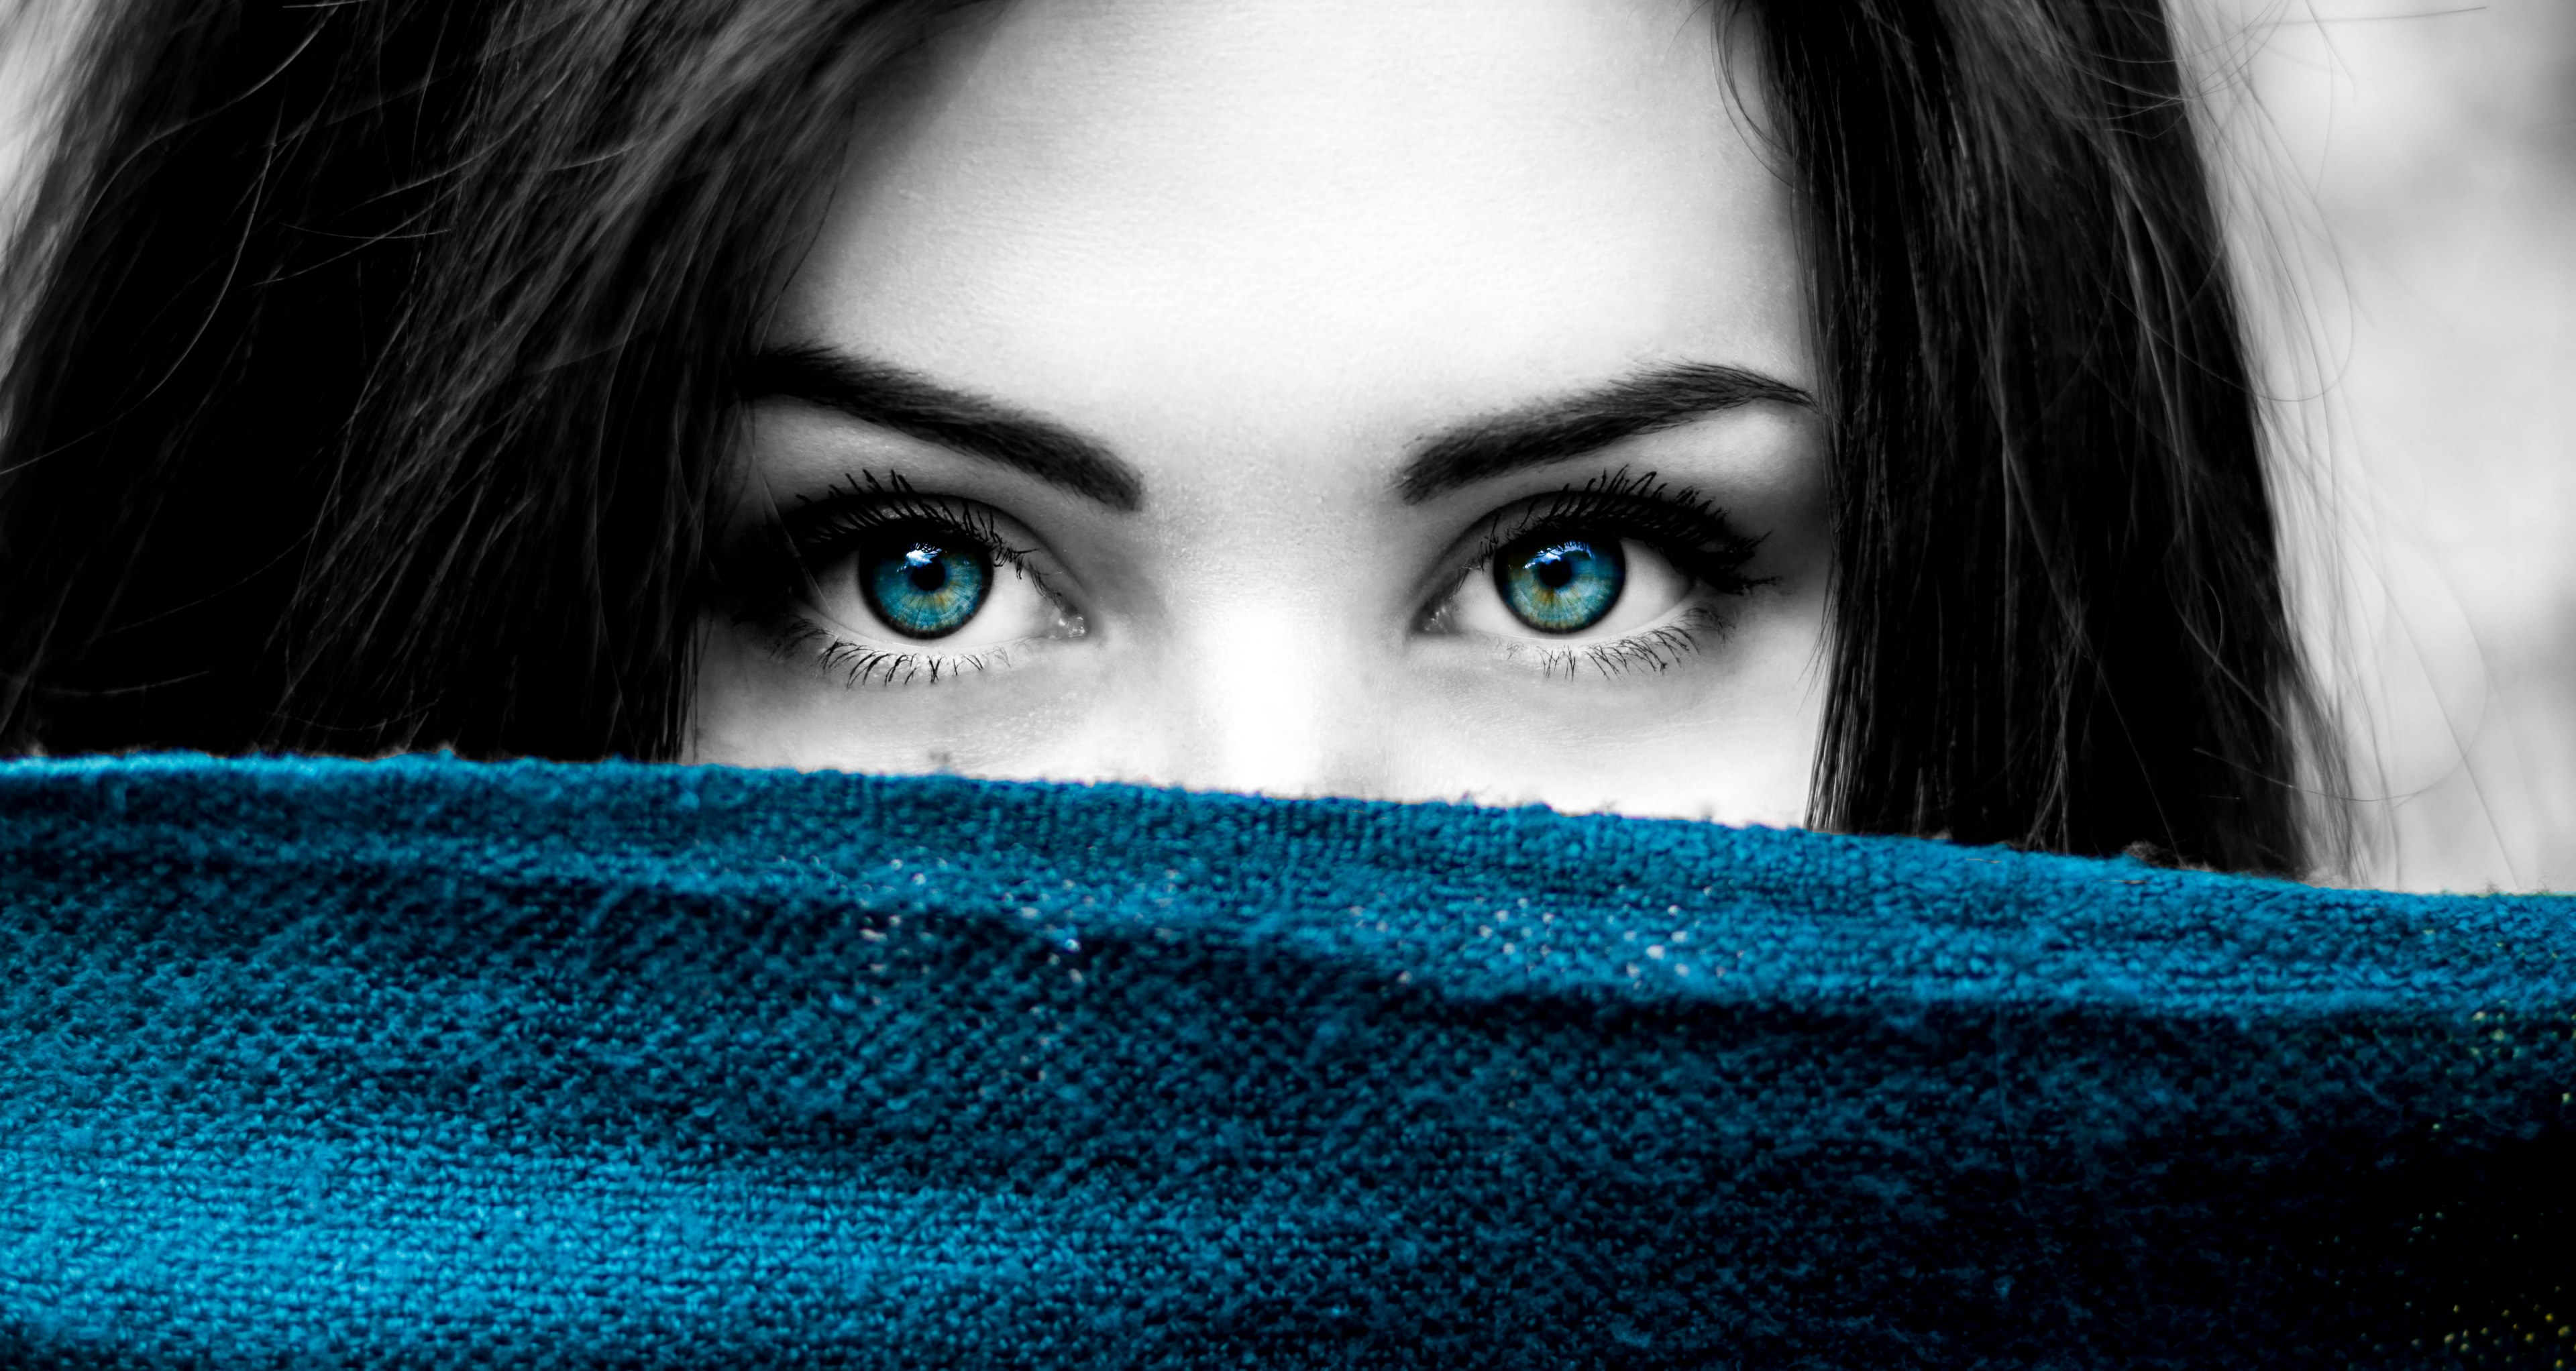 Wallpaper id woman blue eyes blue girl black and white k wallpaper free download